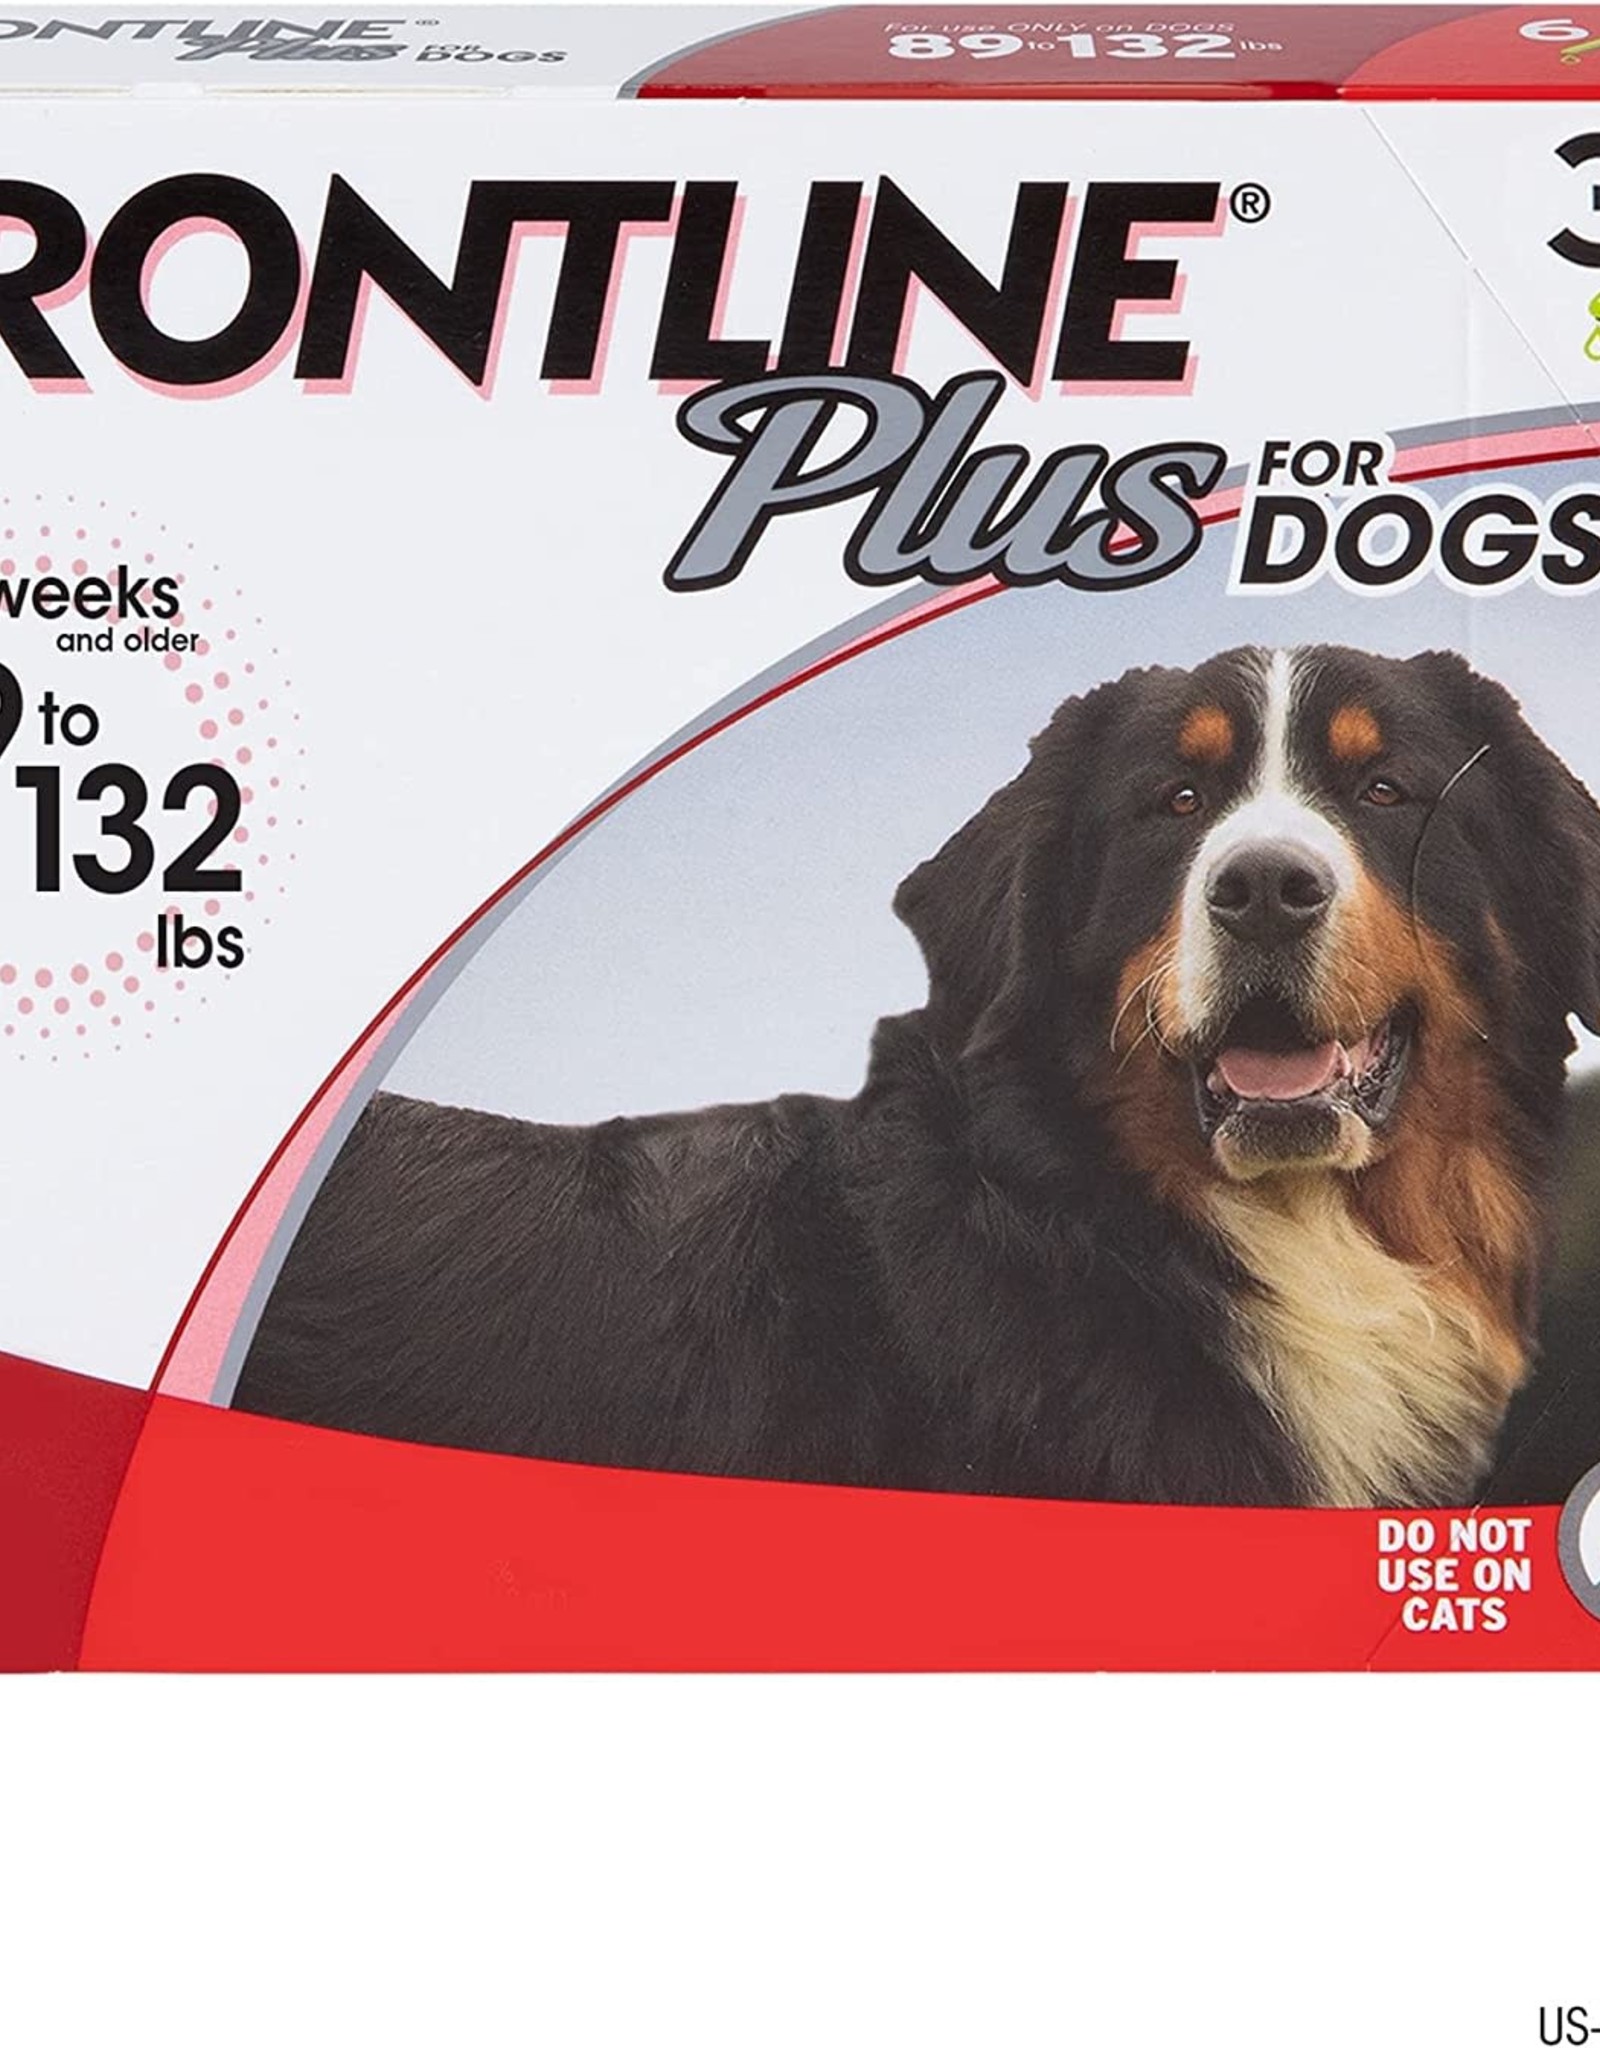 ADV Frontline PLUS Canine 89-132# RED Flea, Tick and Lice SINGLE DOSE